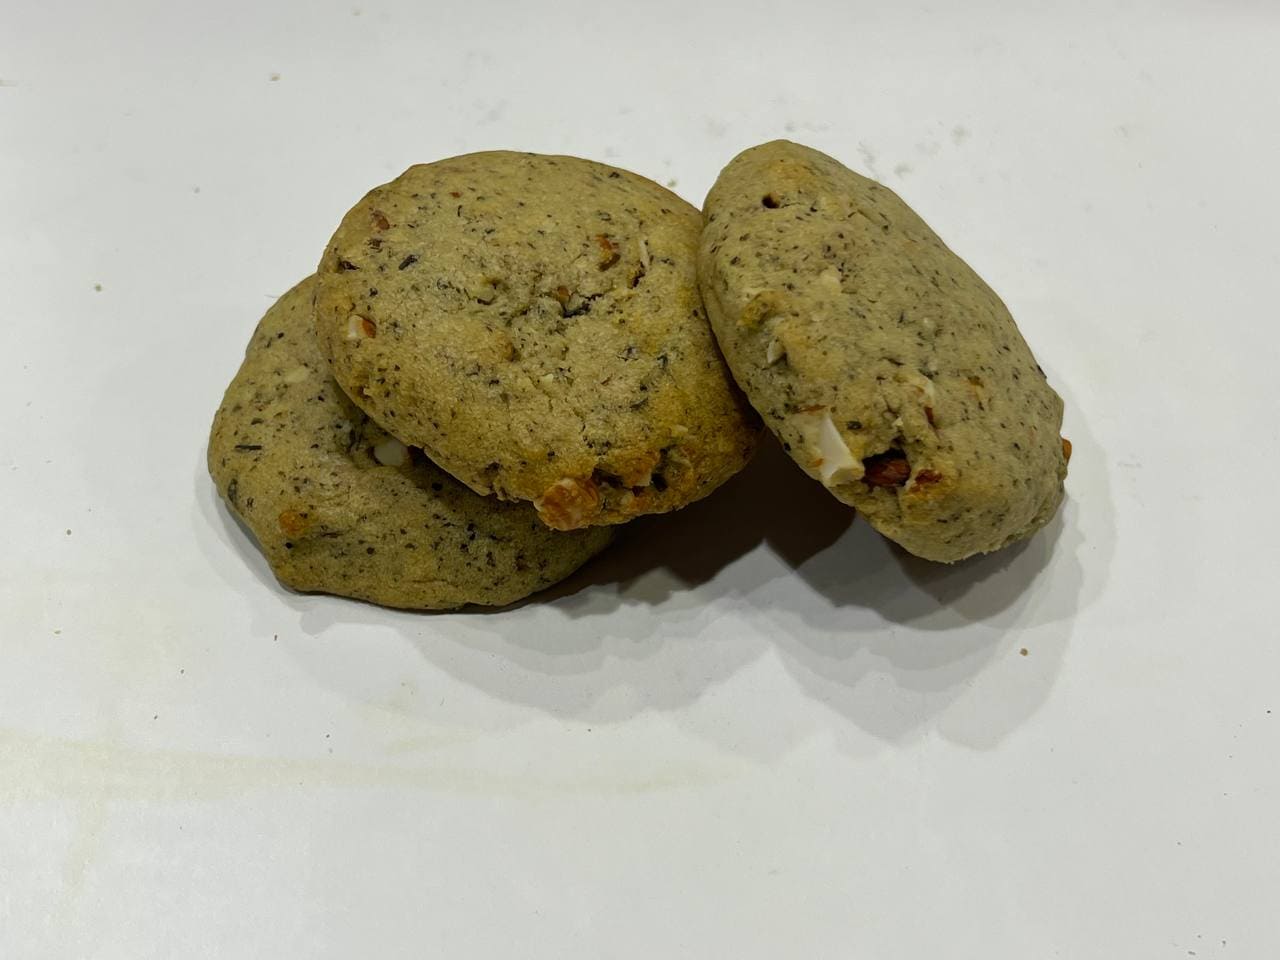 Matcha Almond Cookies